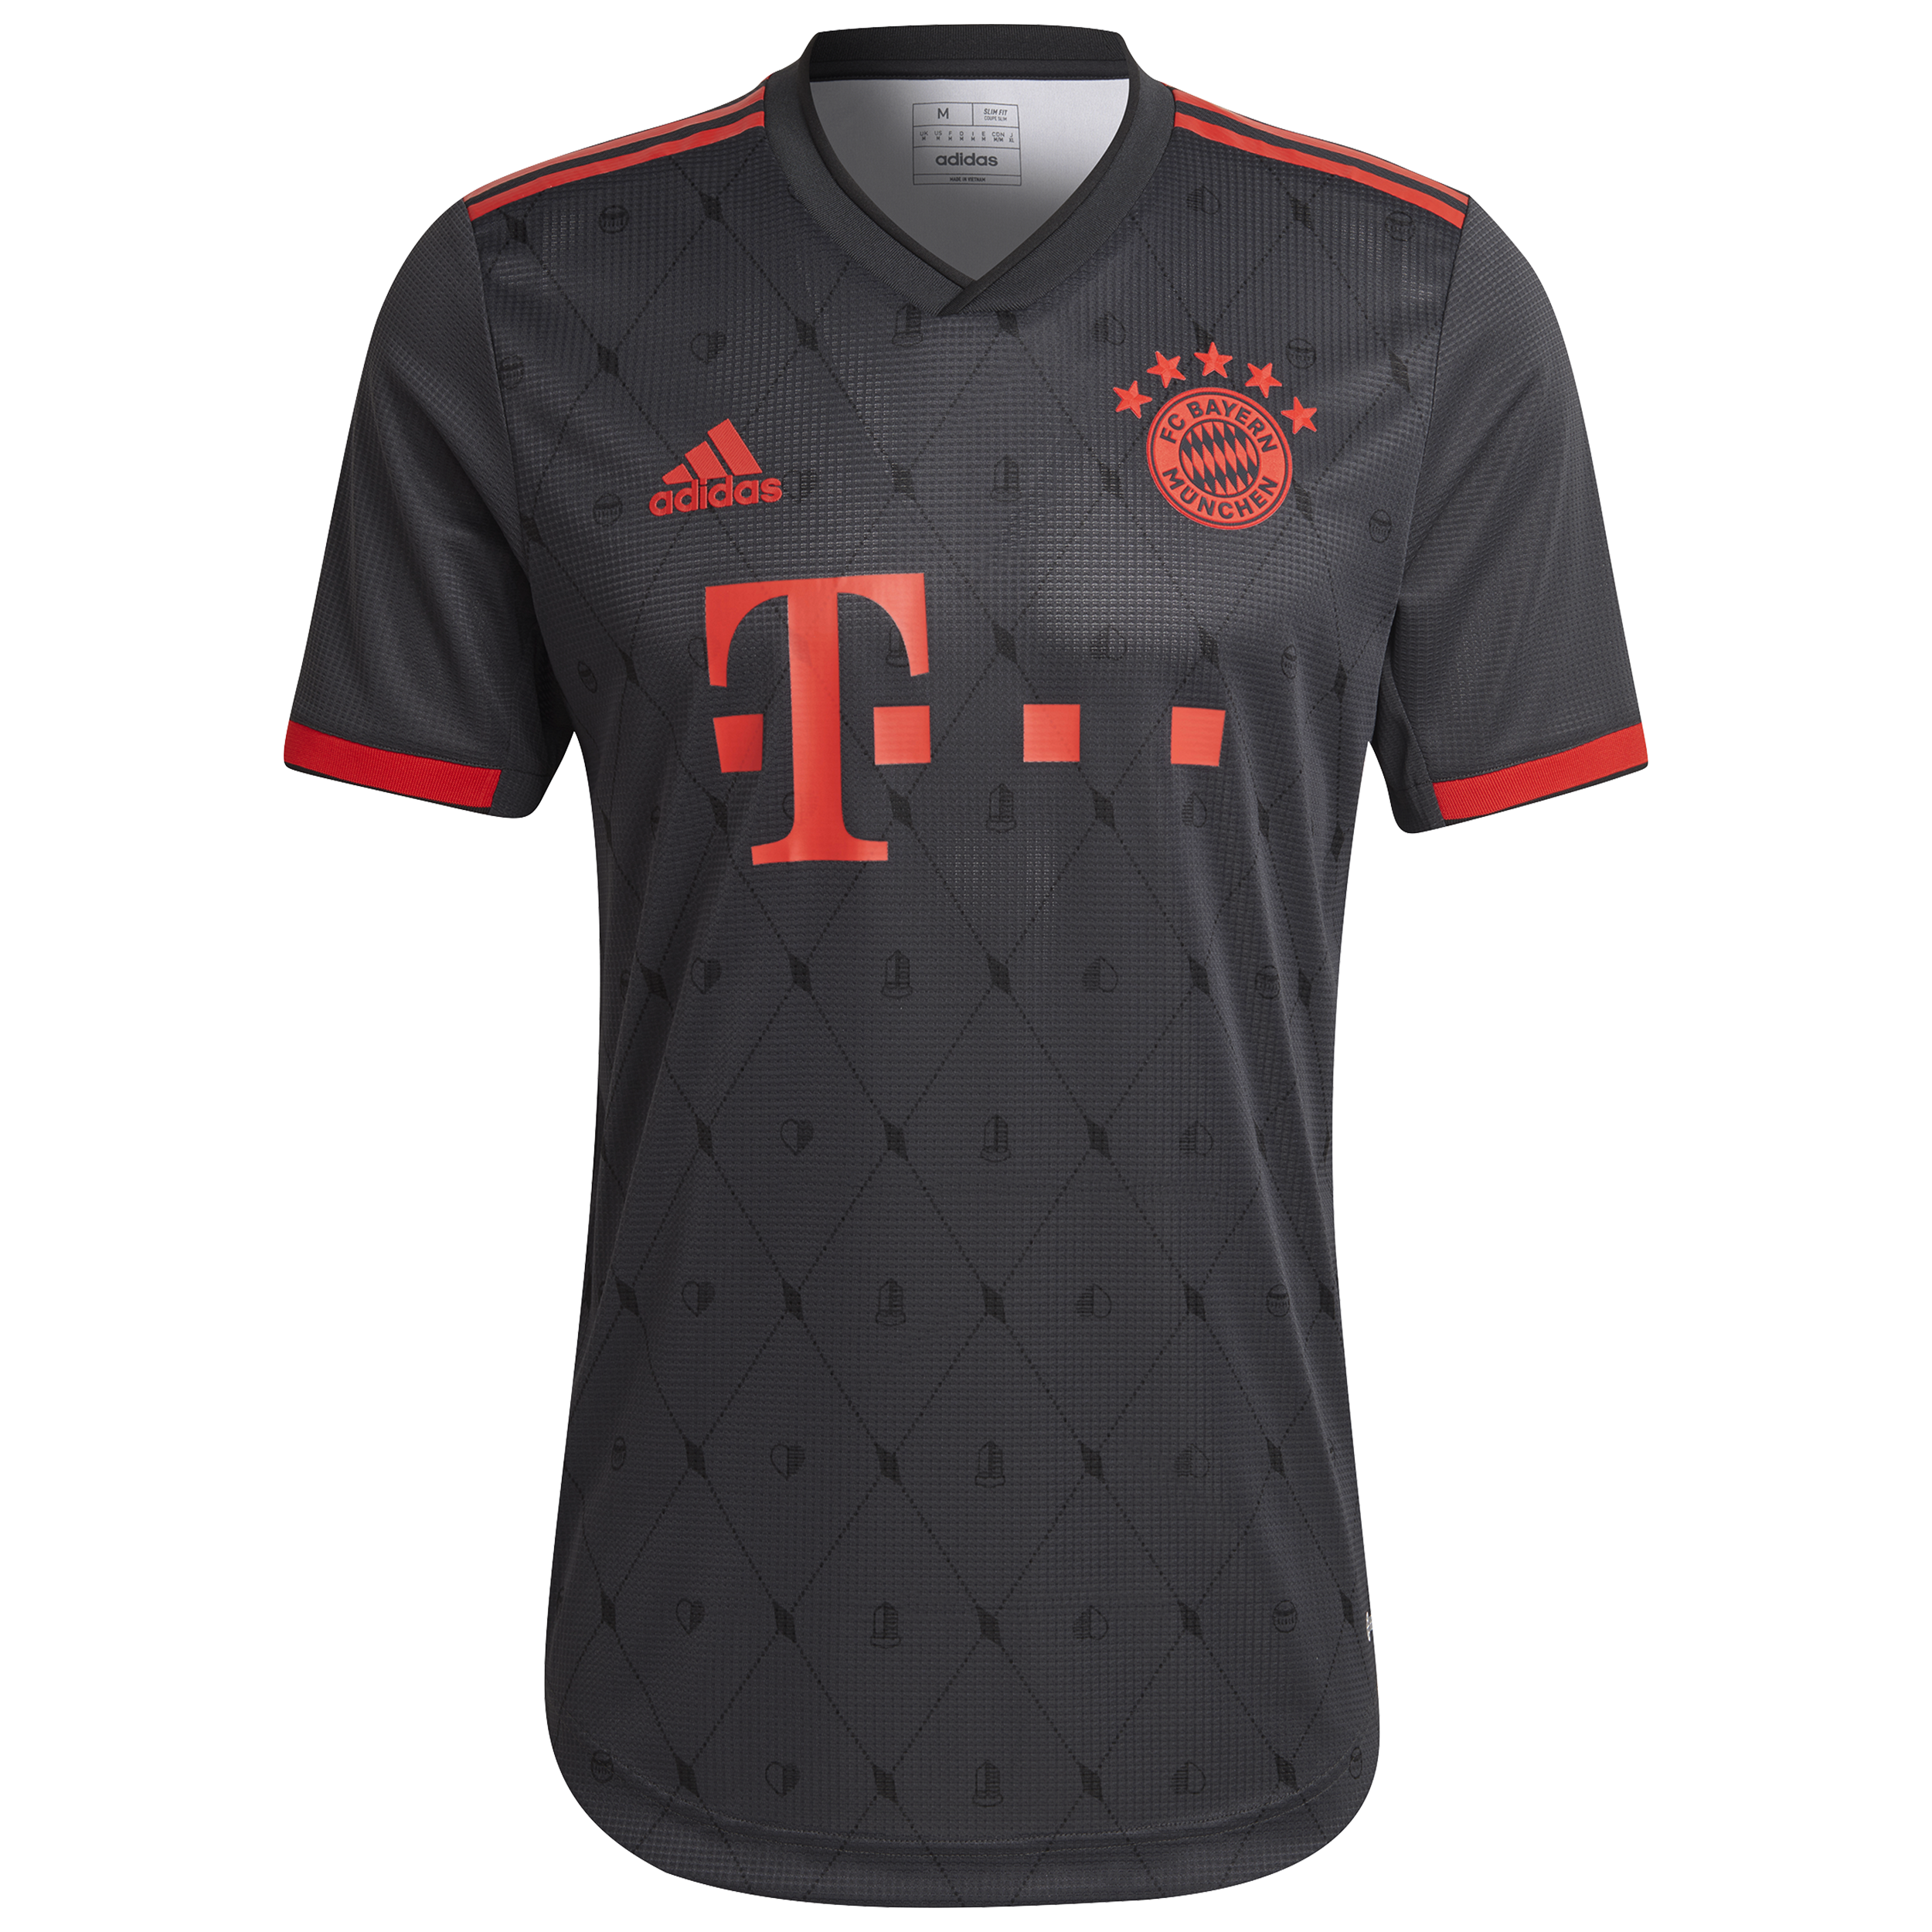 FC Bayern Third Authentic Shirt 2022-23 with Sabitzer 18 printing